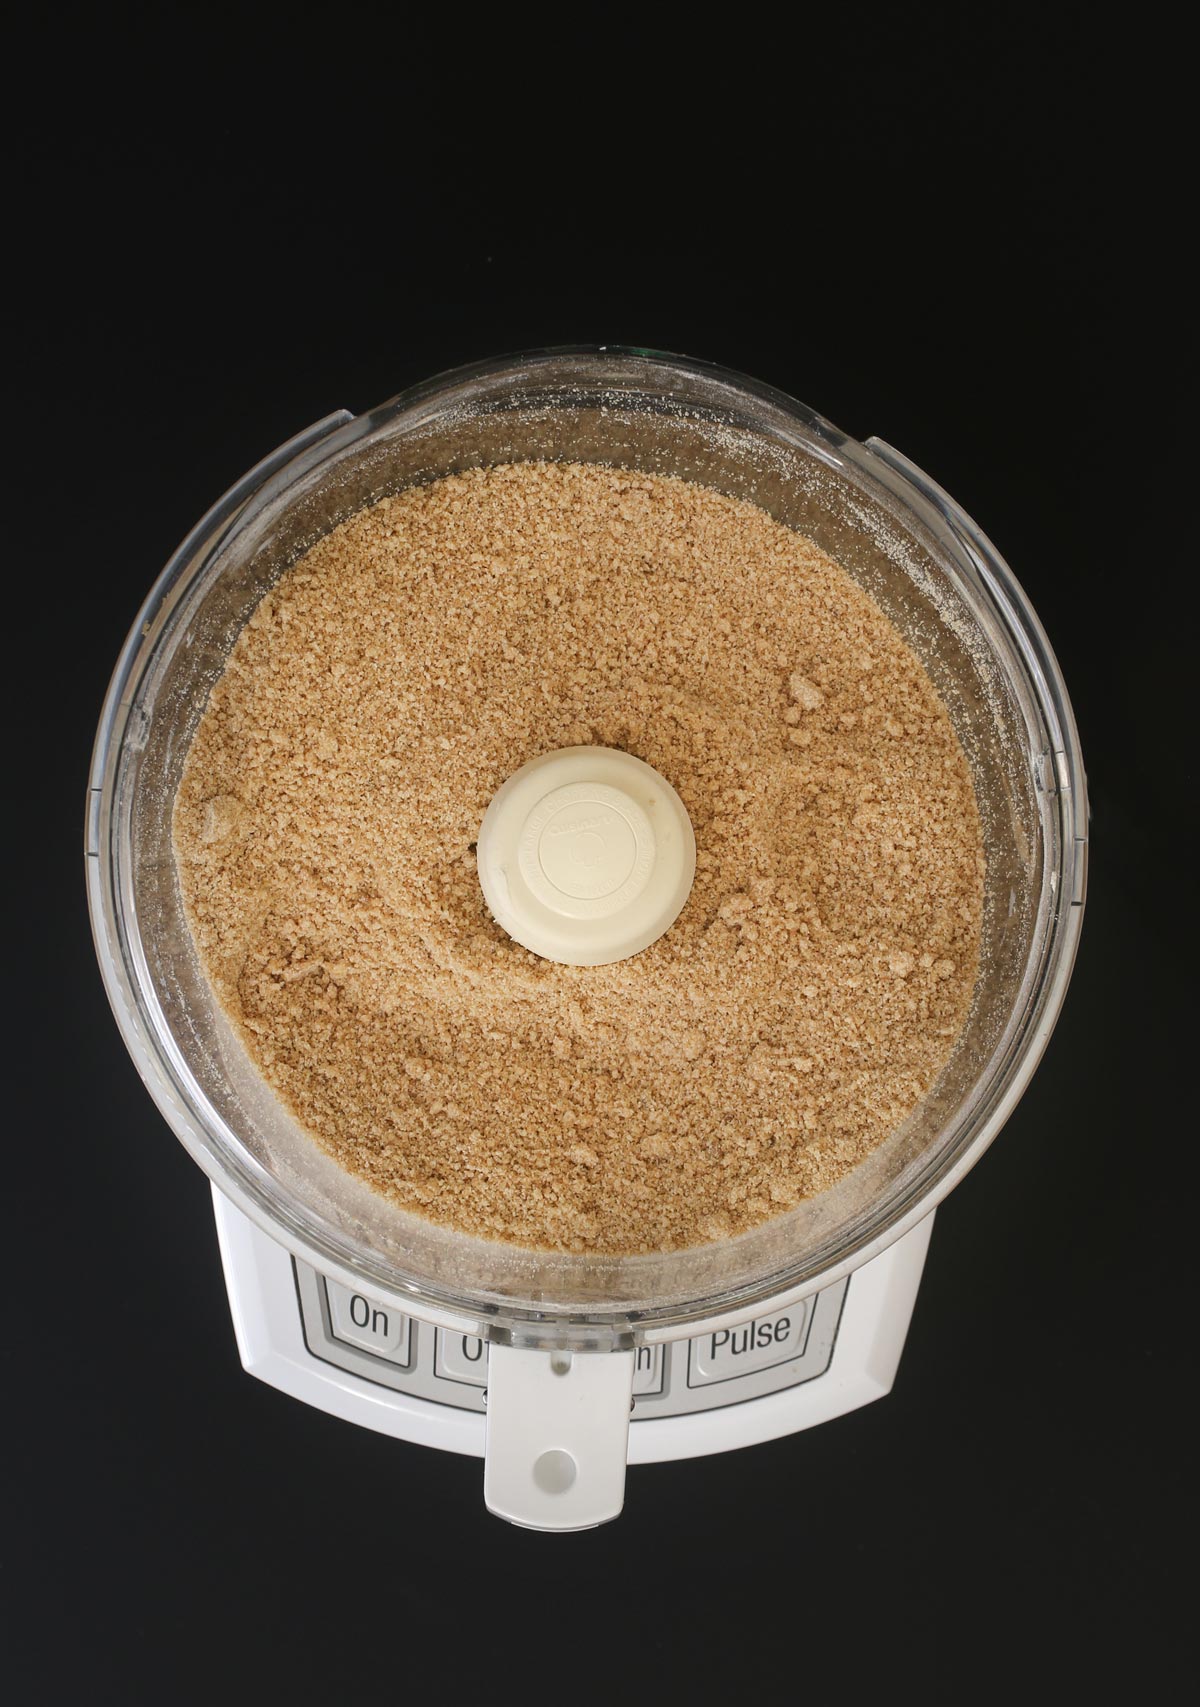 crumb mixture in food processor bowl.